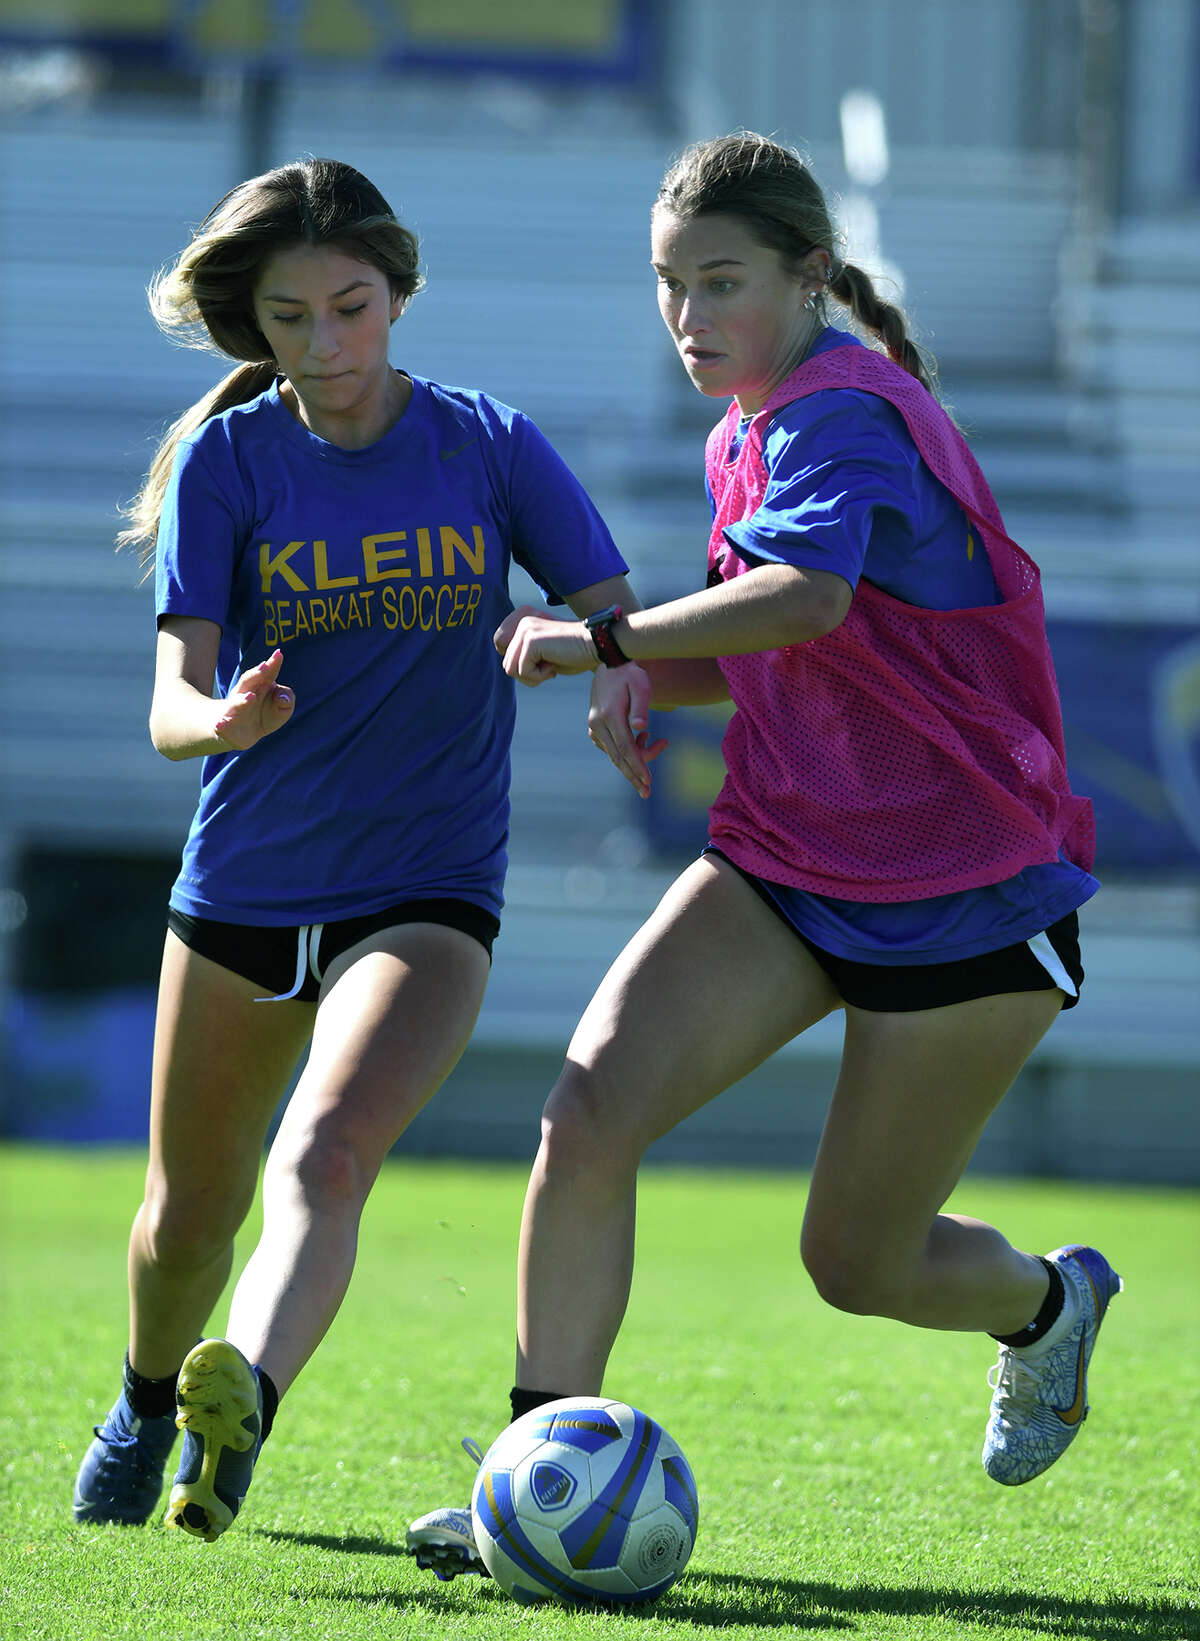 Klein High School senior Maddie Nissen, right, works the ball upfield against a teammate during a varsity team soccer practice on Dec. 15, 2022.